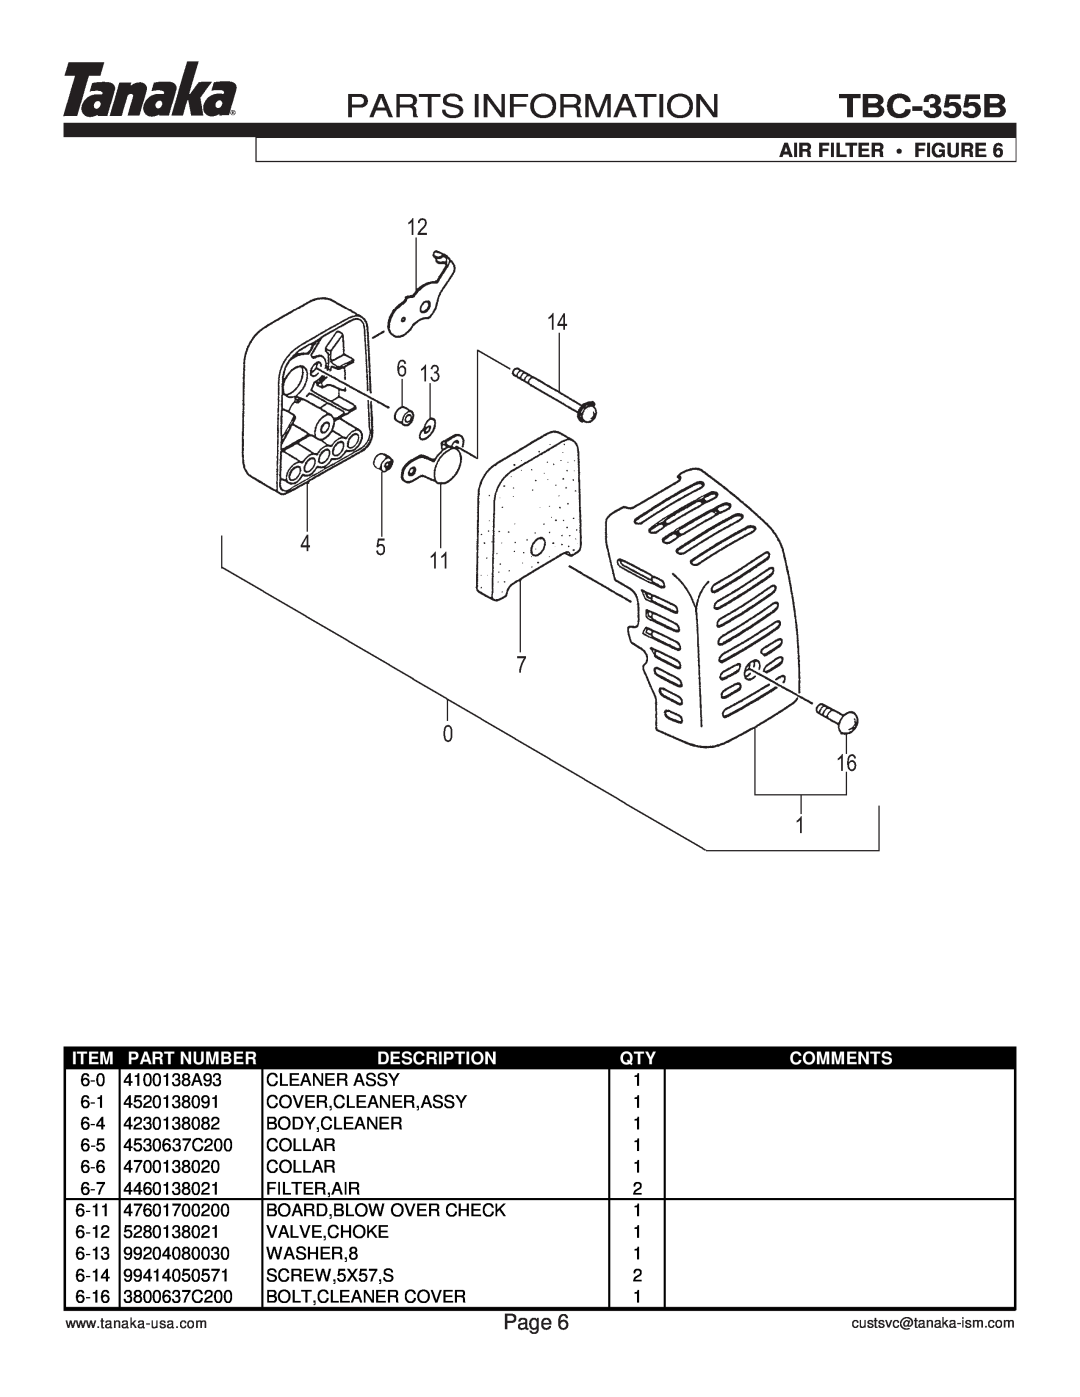 Tanaka TBC-355B manual Air Filter • Figure, Parts Information, Page, Item, Part Number, Description, Comments 